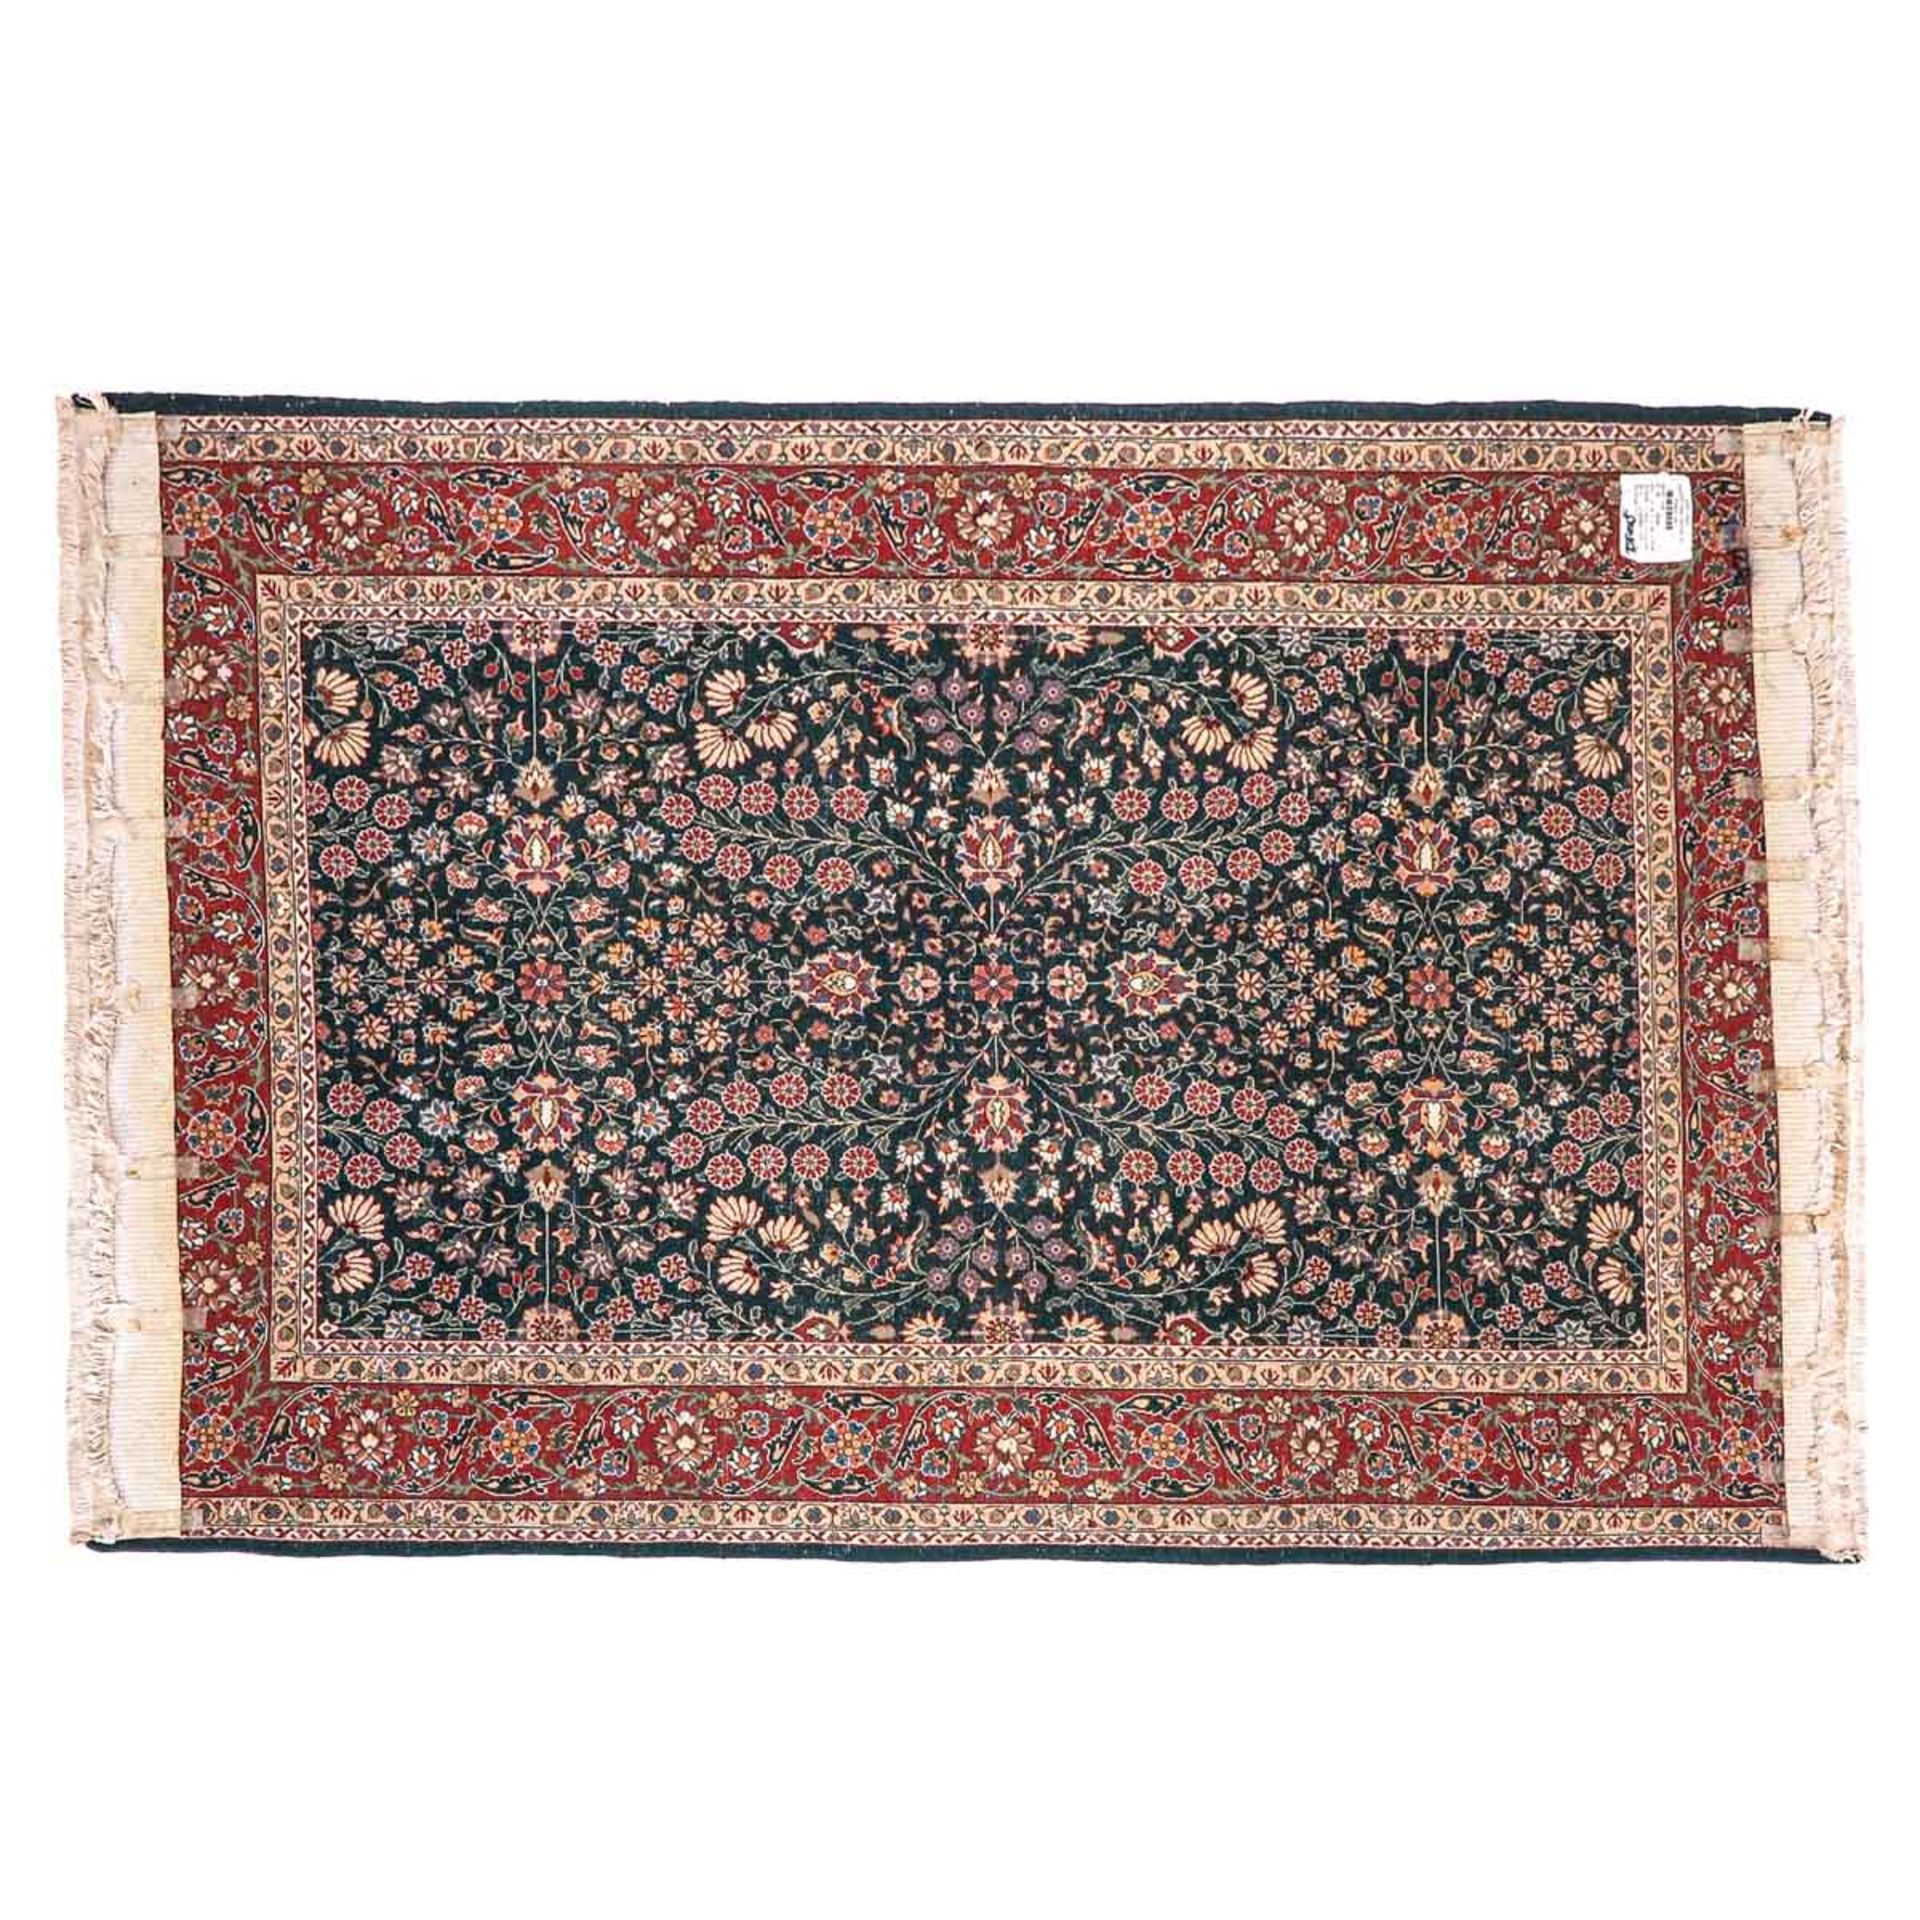 A Wool Carpet - Image 2 of 5